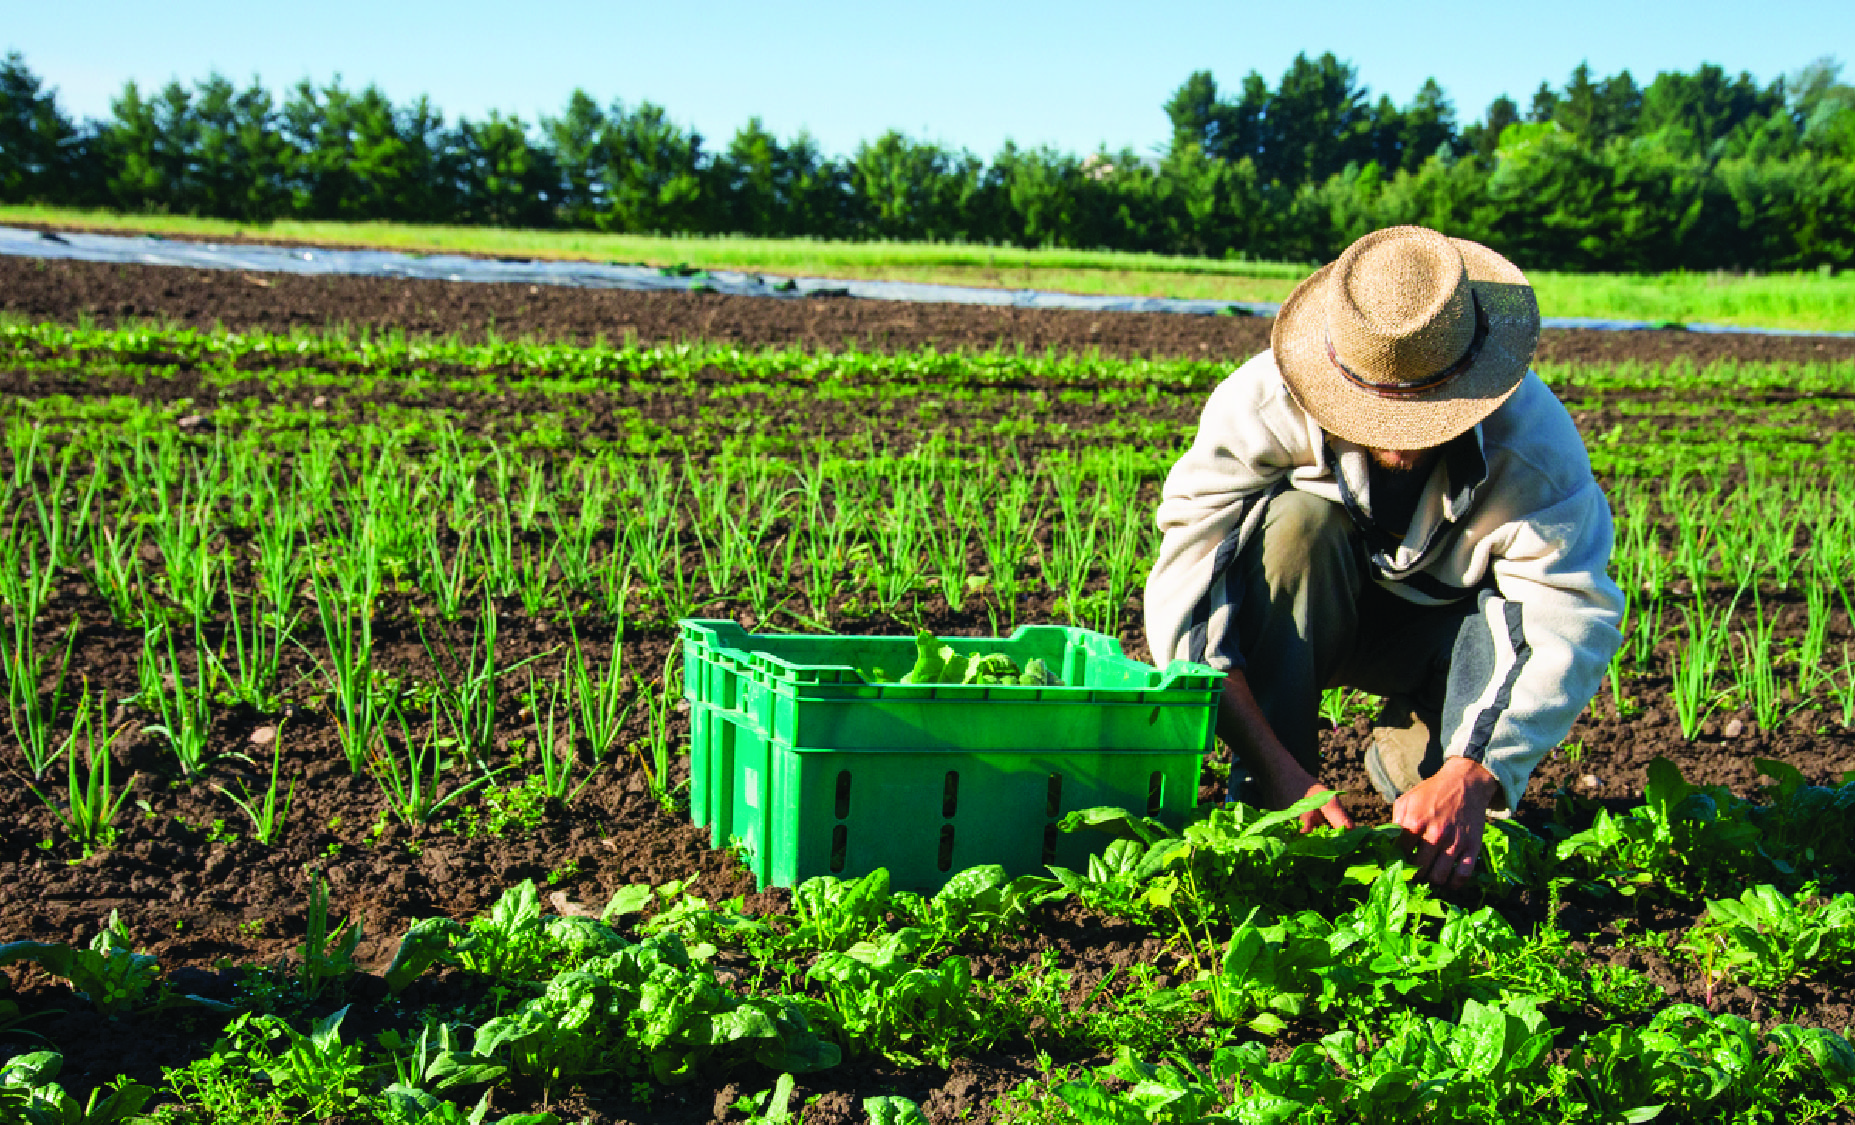 seasonal worker picking vegetables in a field